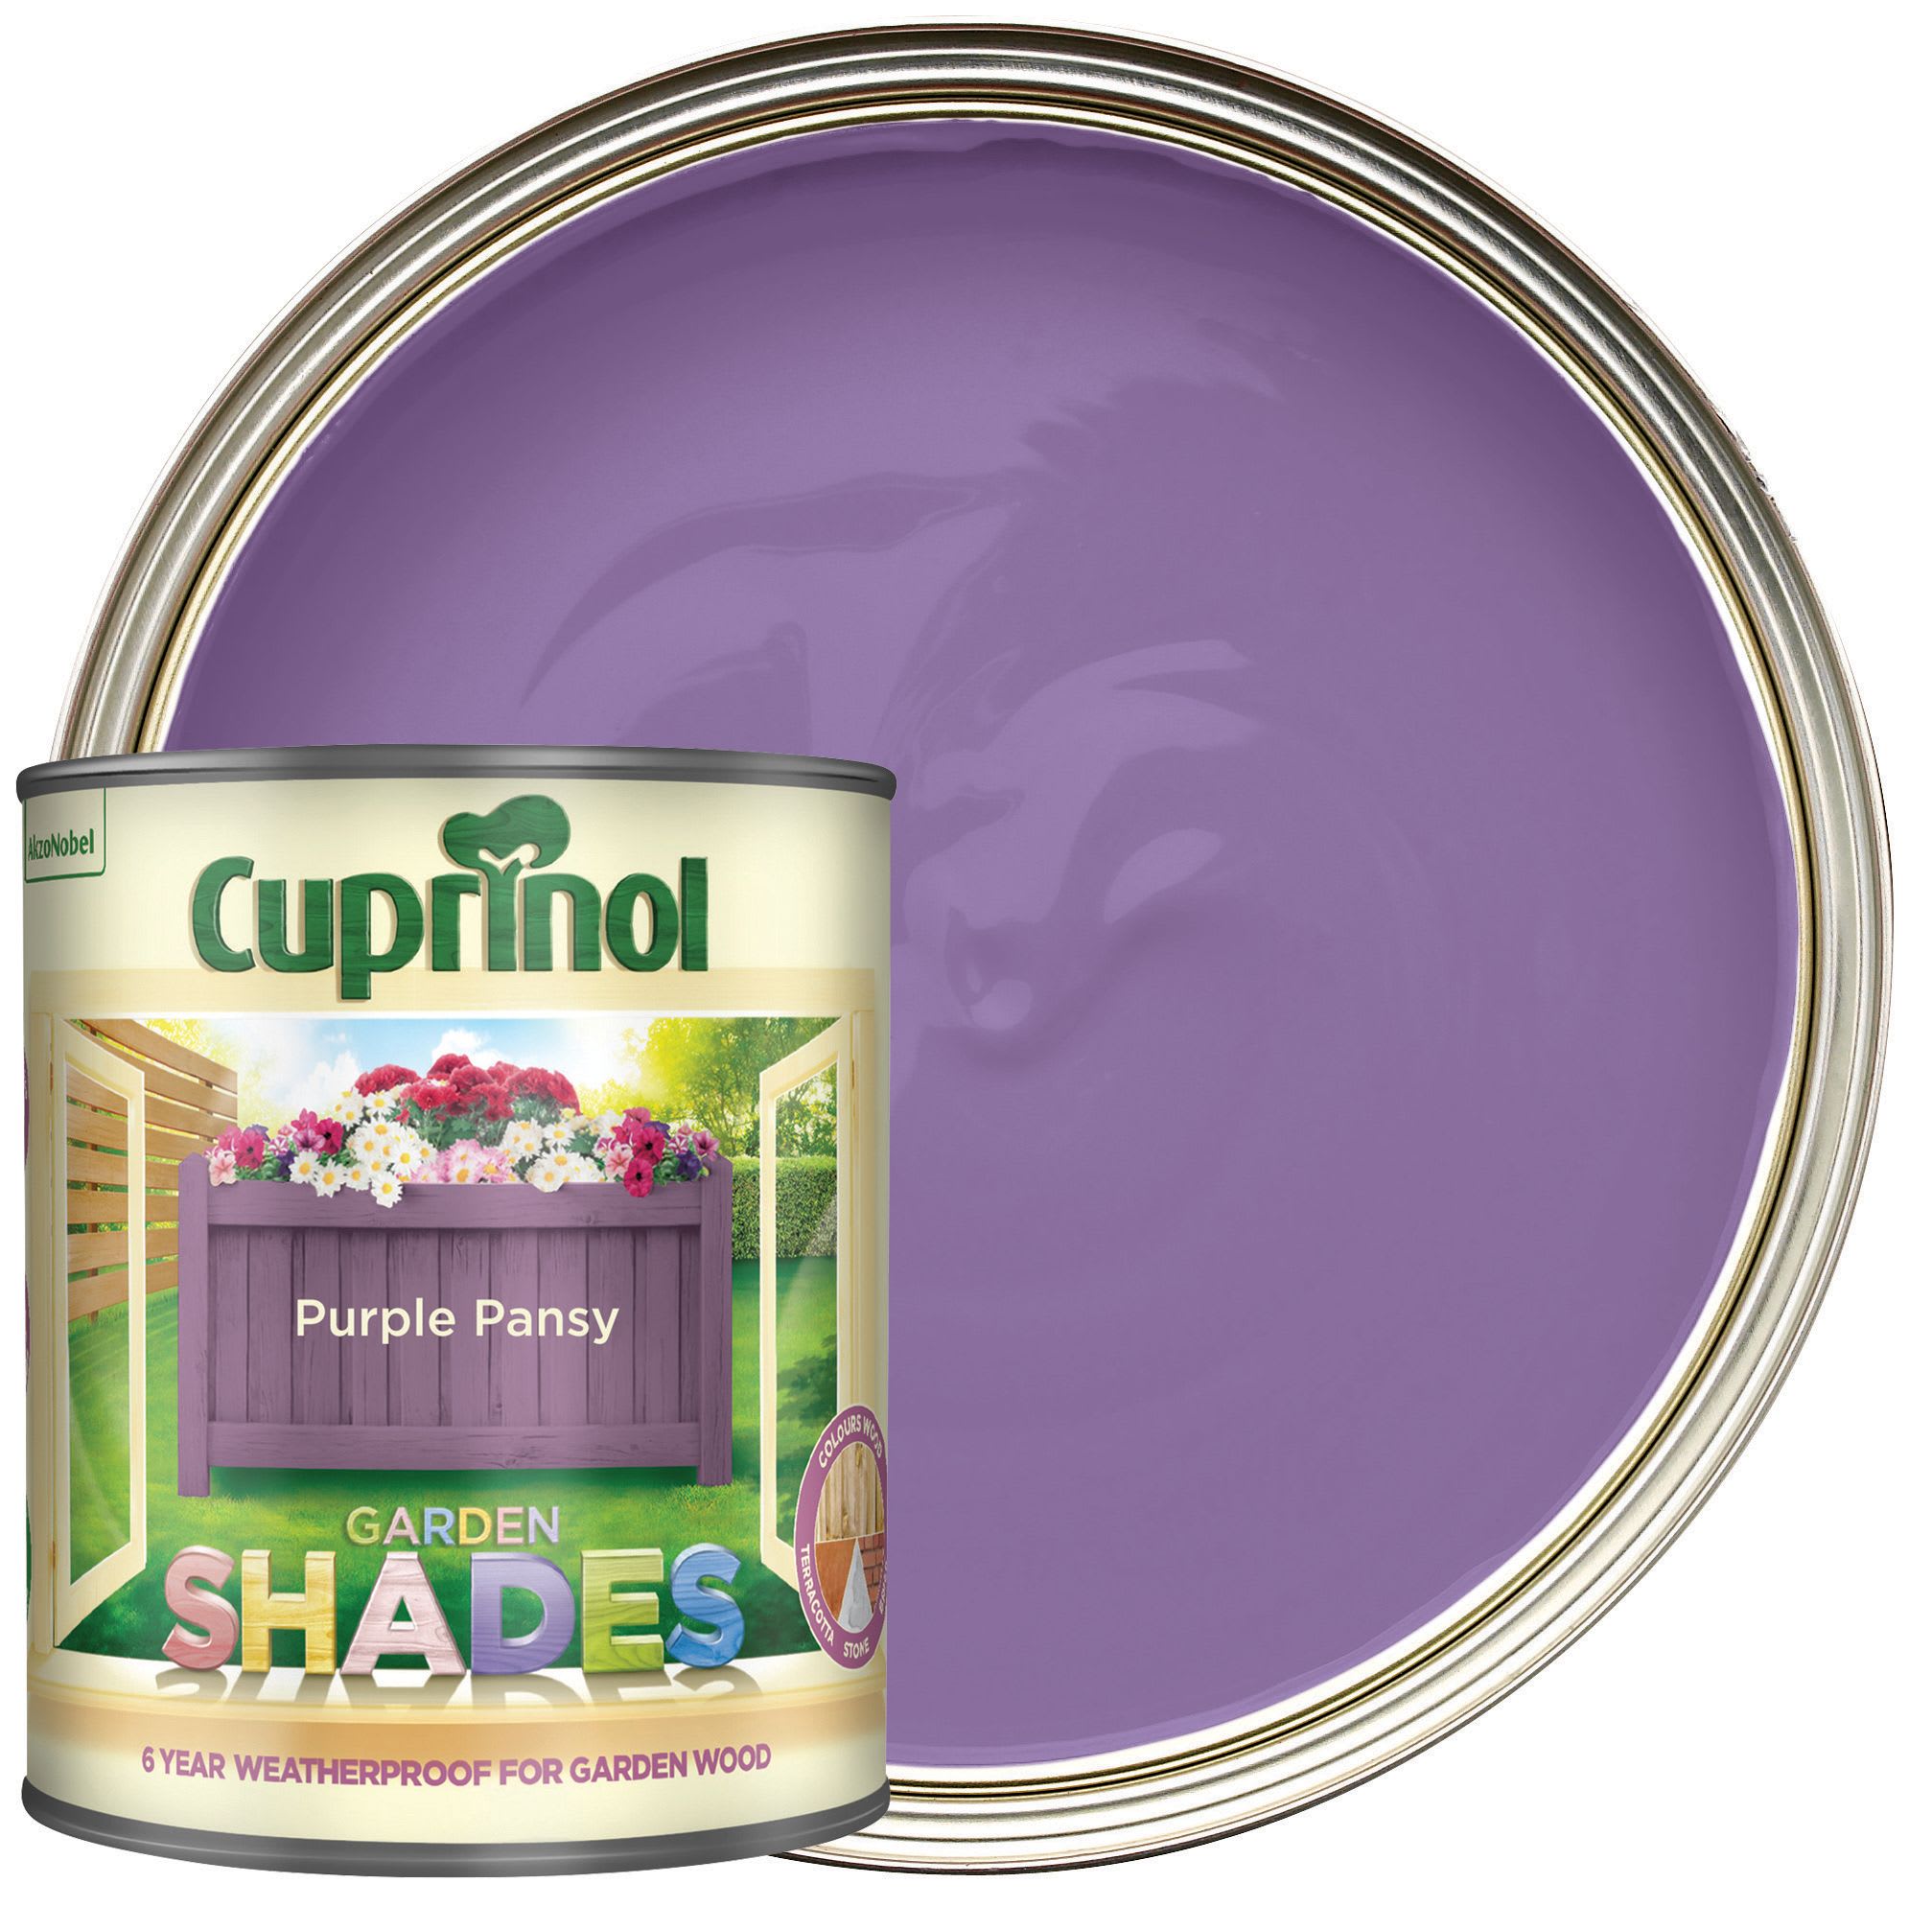 Cuprinol Garden Shades Matt Wood Treatment - Purple